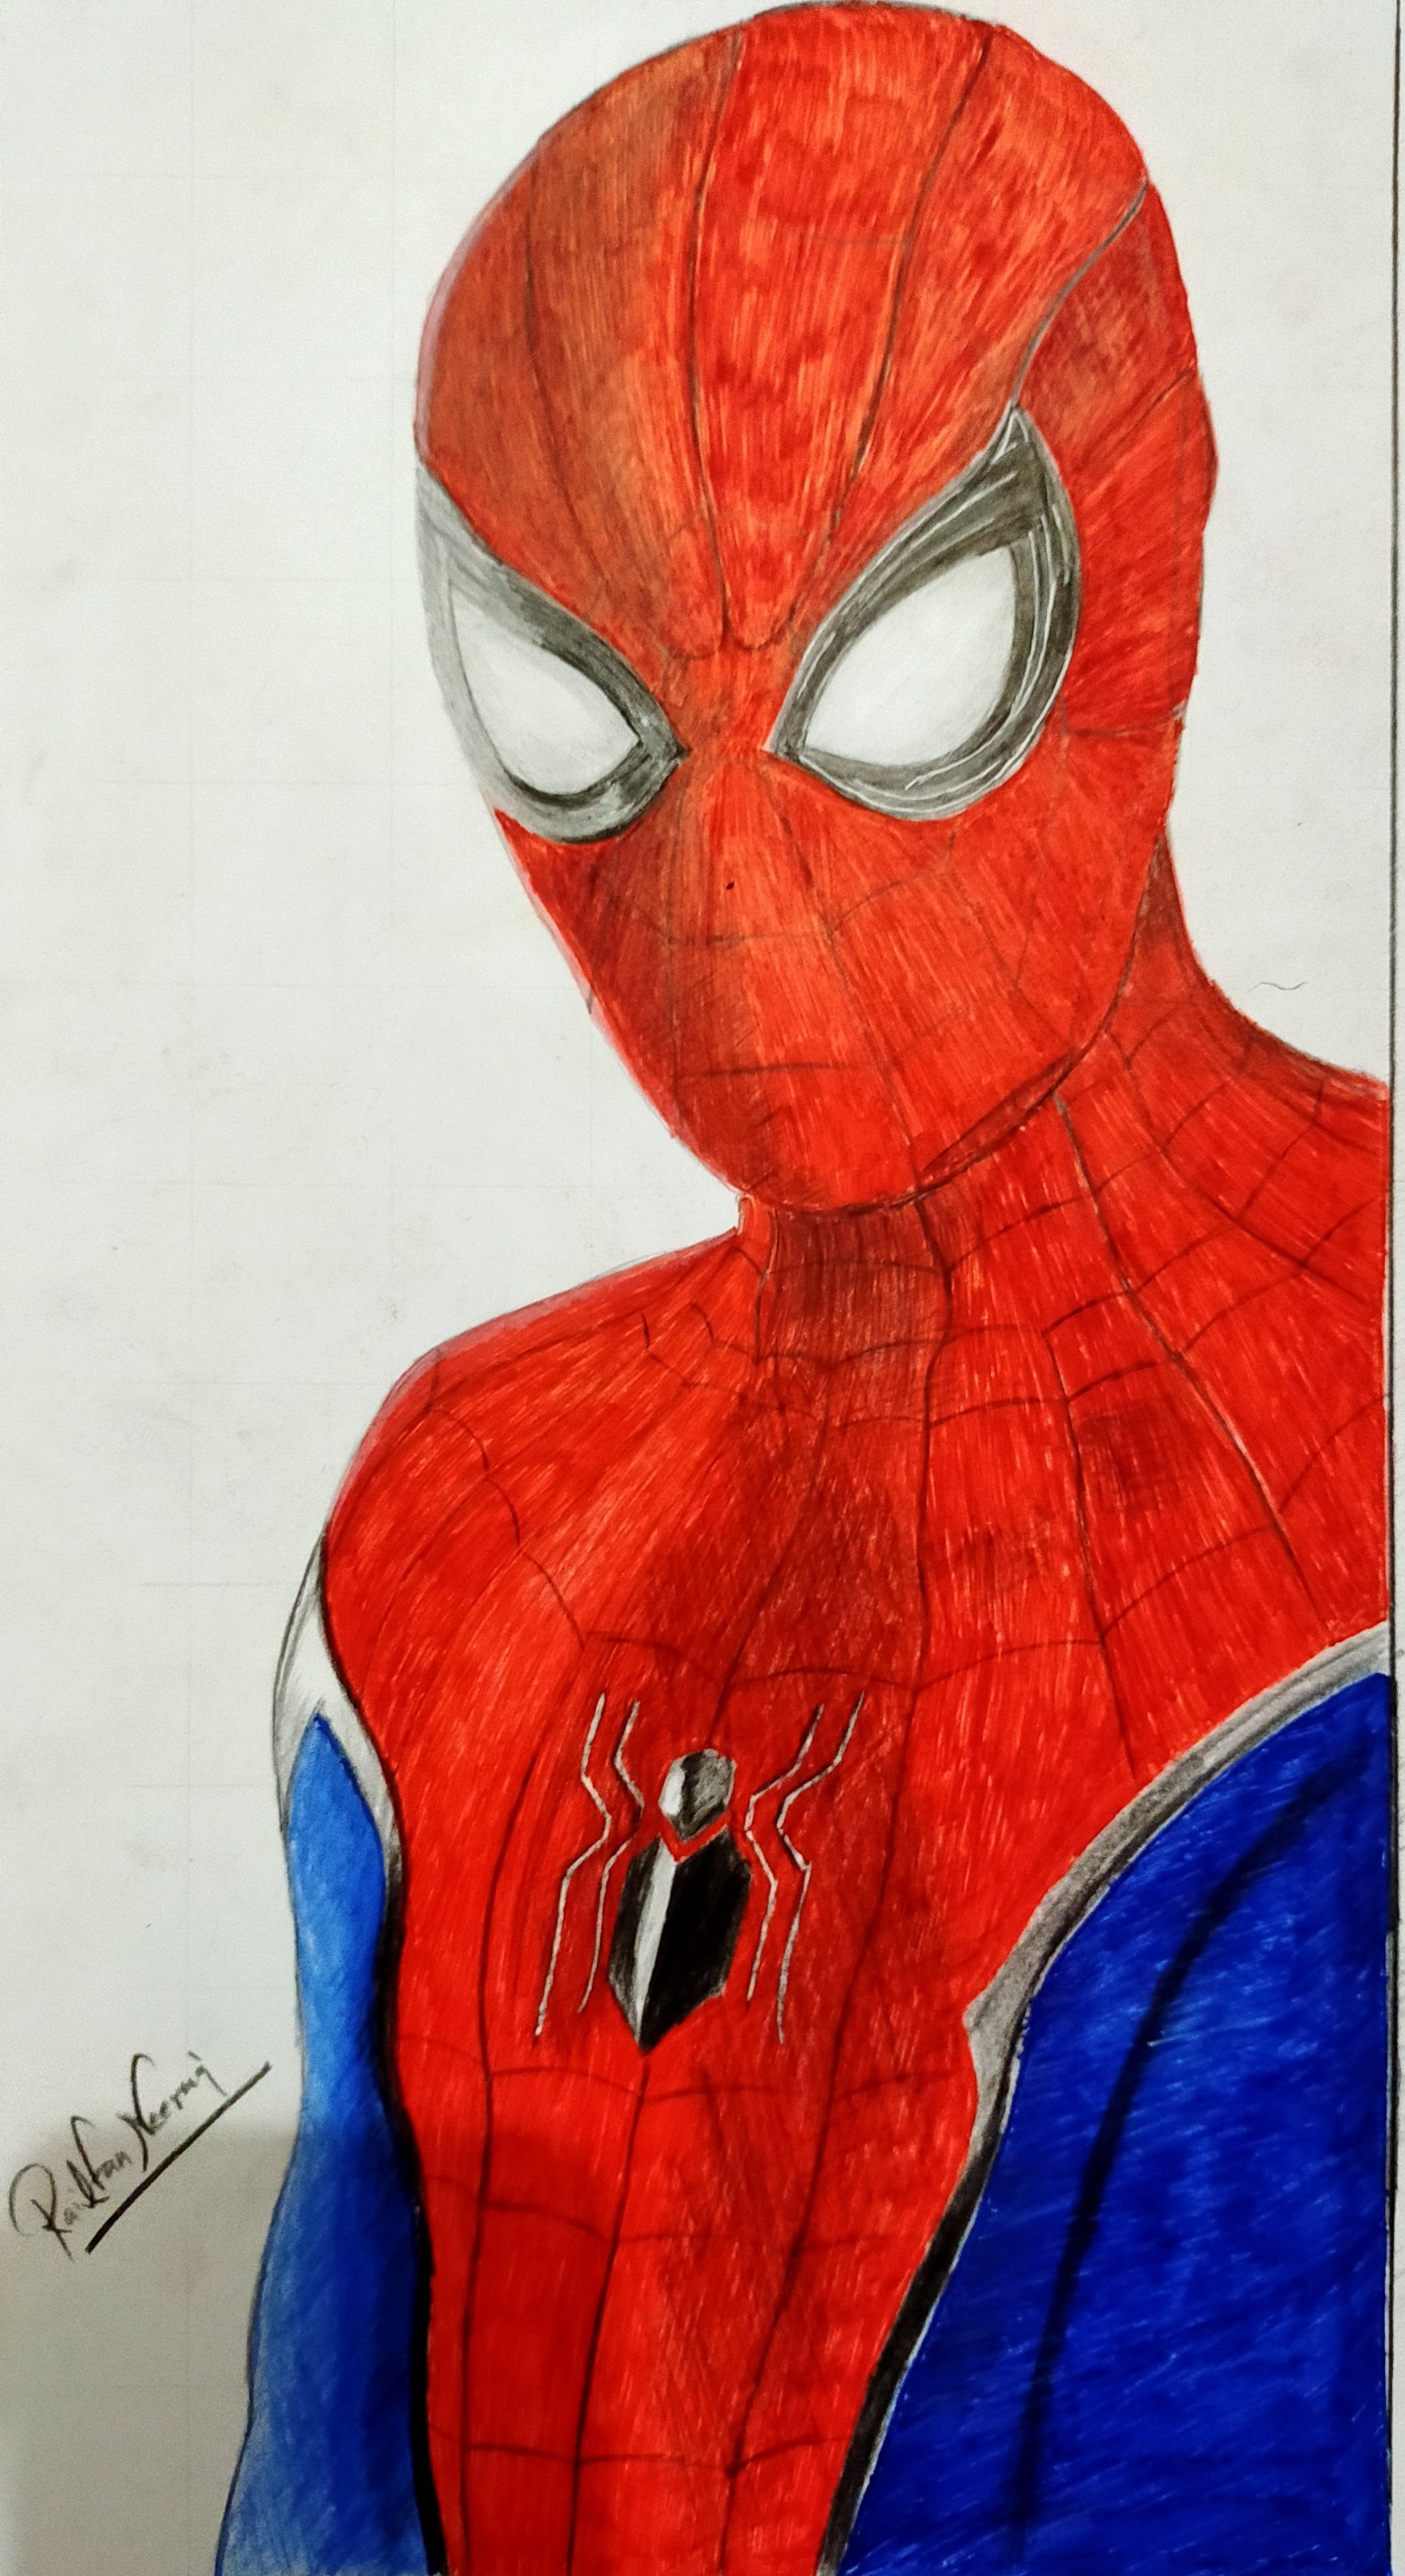 Spider Man Sketch Images - Spiderman Spider Man Sketch Easy Sketches ...